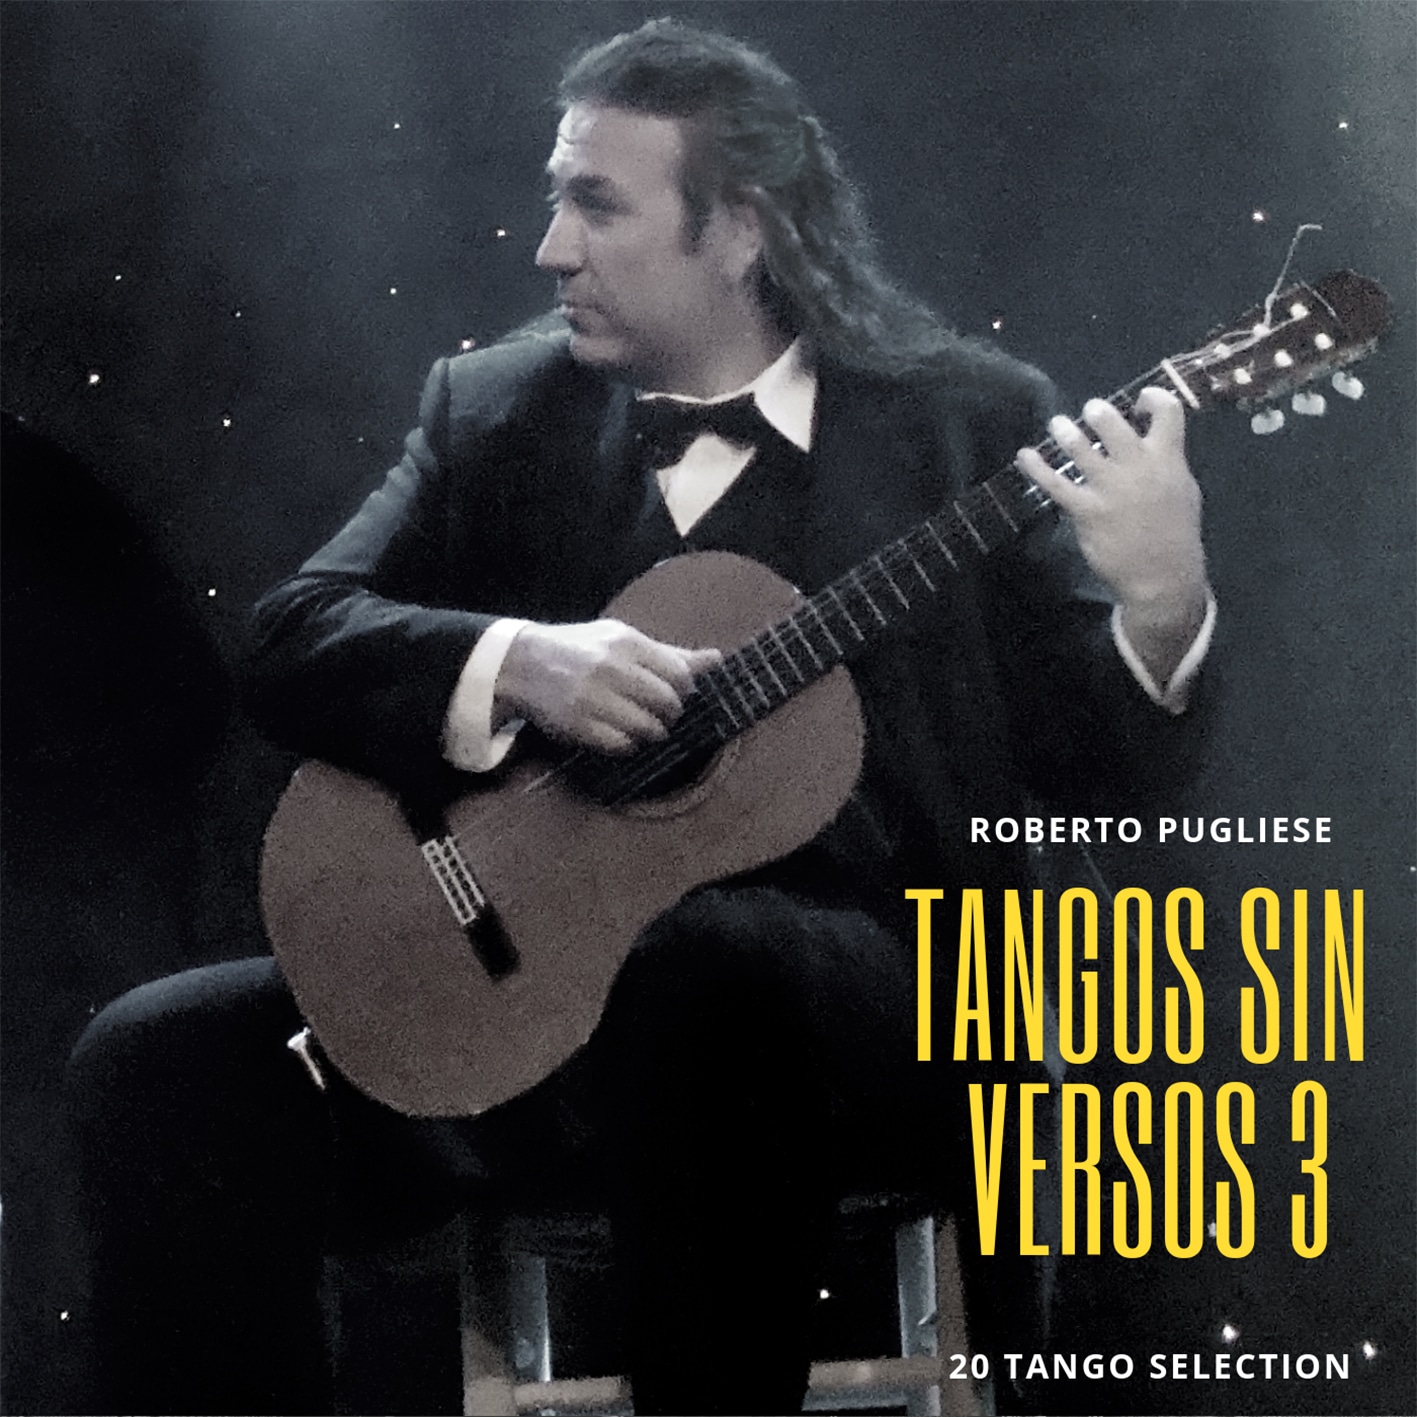 Tangos sin versos 3 💿 20 tracks de tangos instrumentales en guitarra